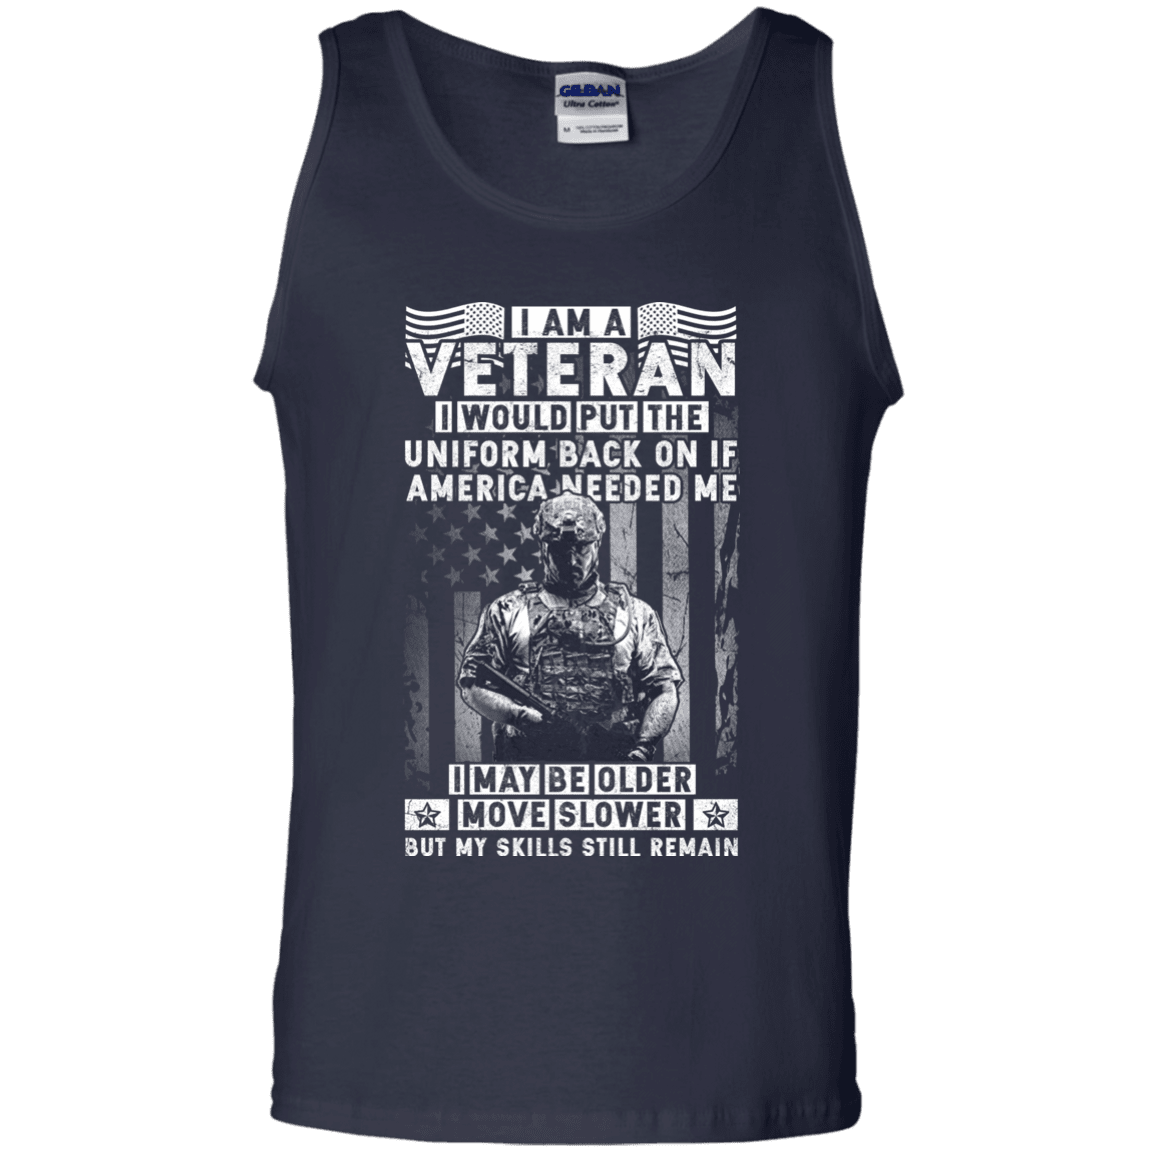 Military T-Shirt "I am a Veteran Men" Front-TShirt-General-Veterans Nation